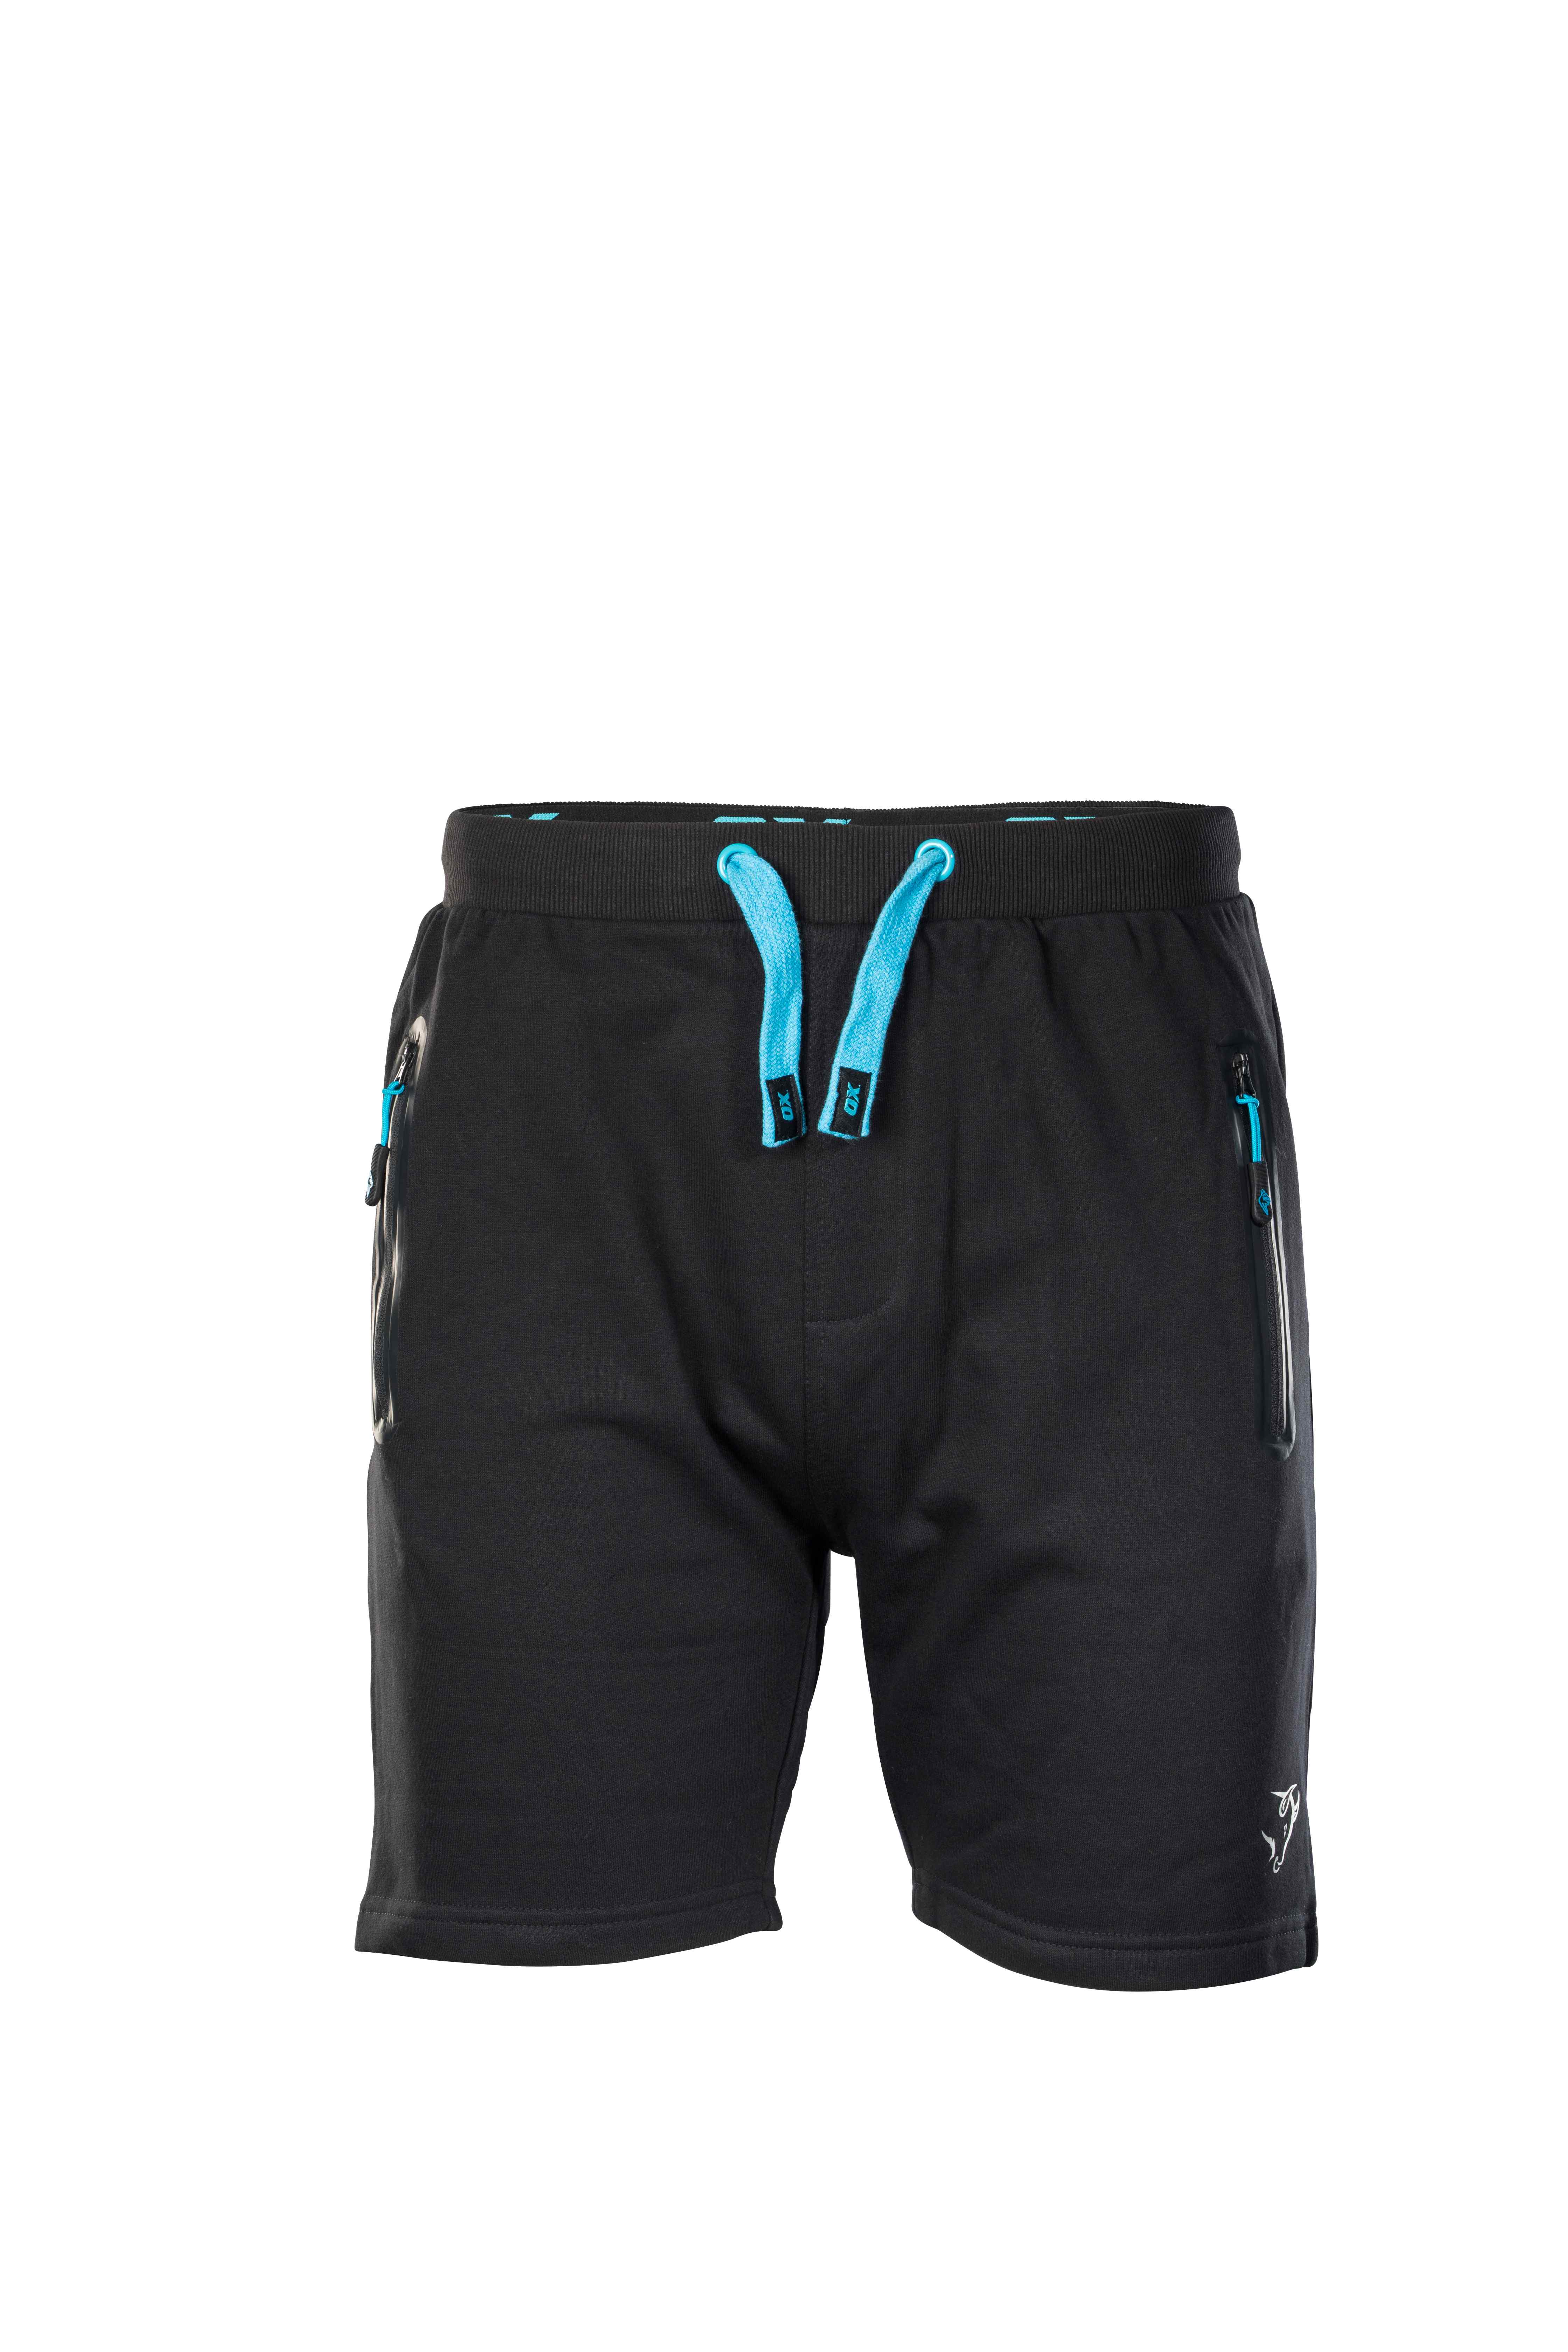 OX Jogger Shorts - Black - 34